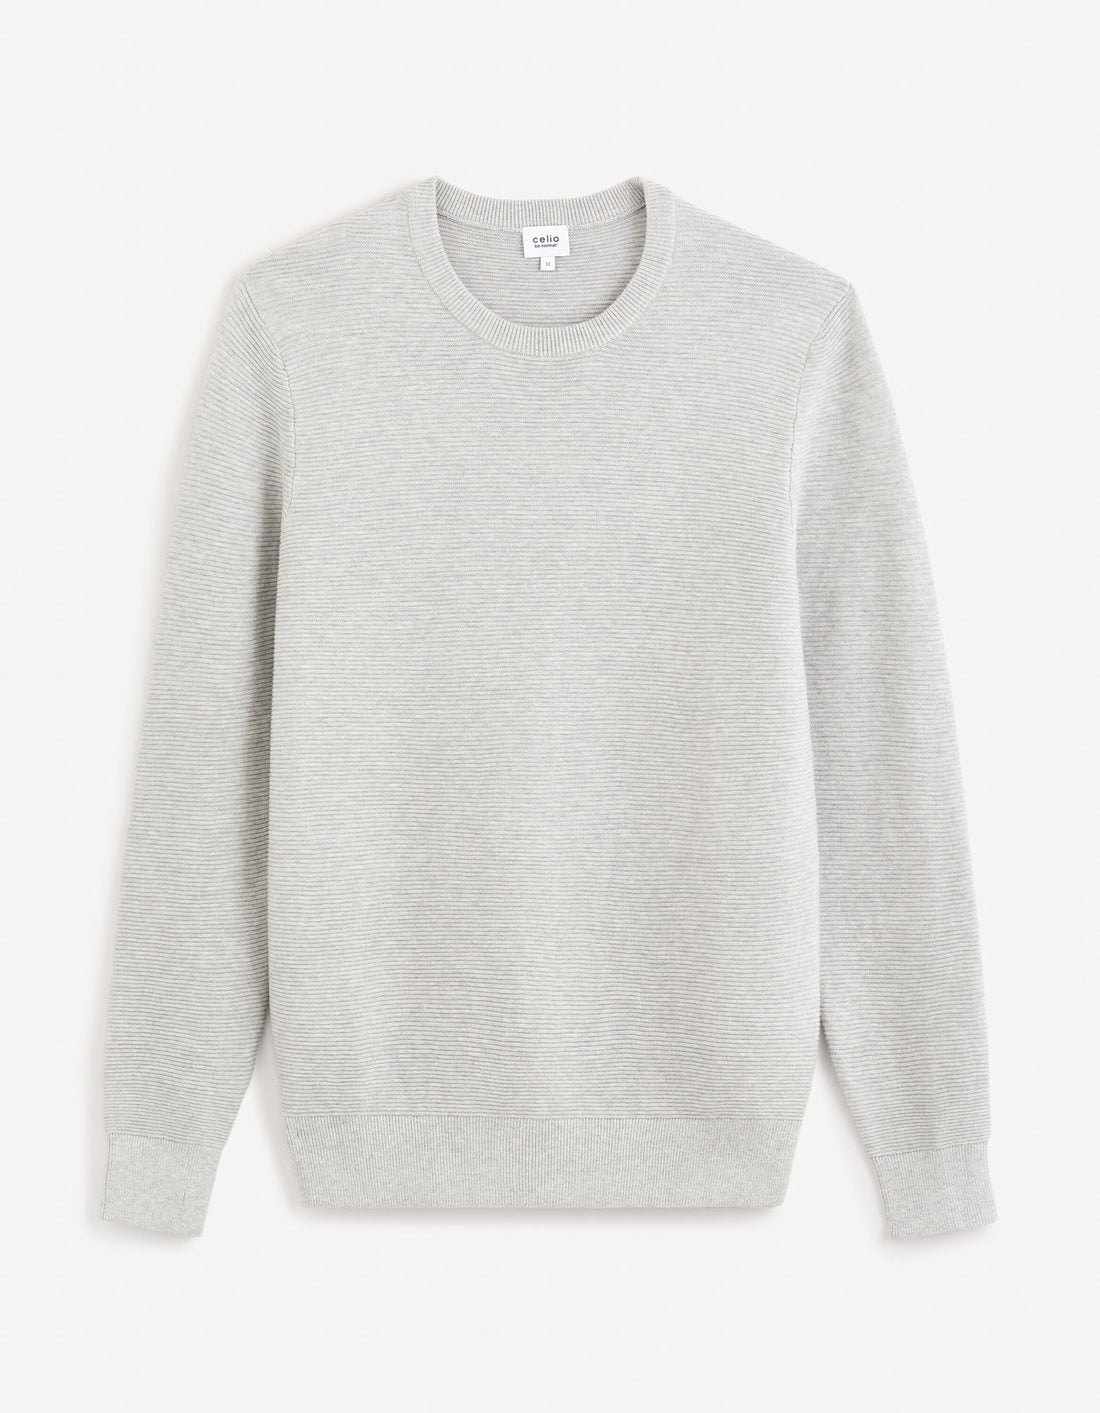 Round Neck Sweater 100% Cotton_FEOTTONI_GREY MEL_02